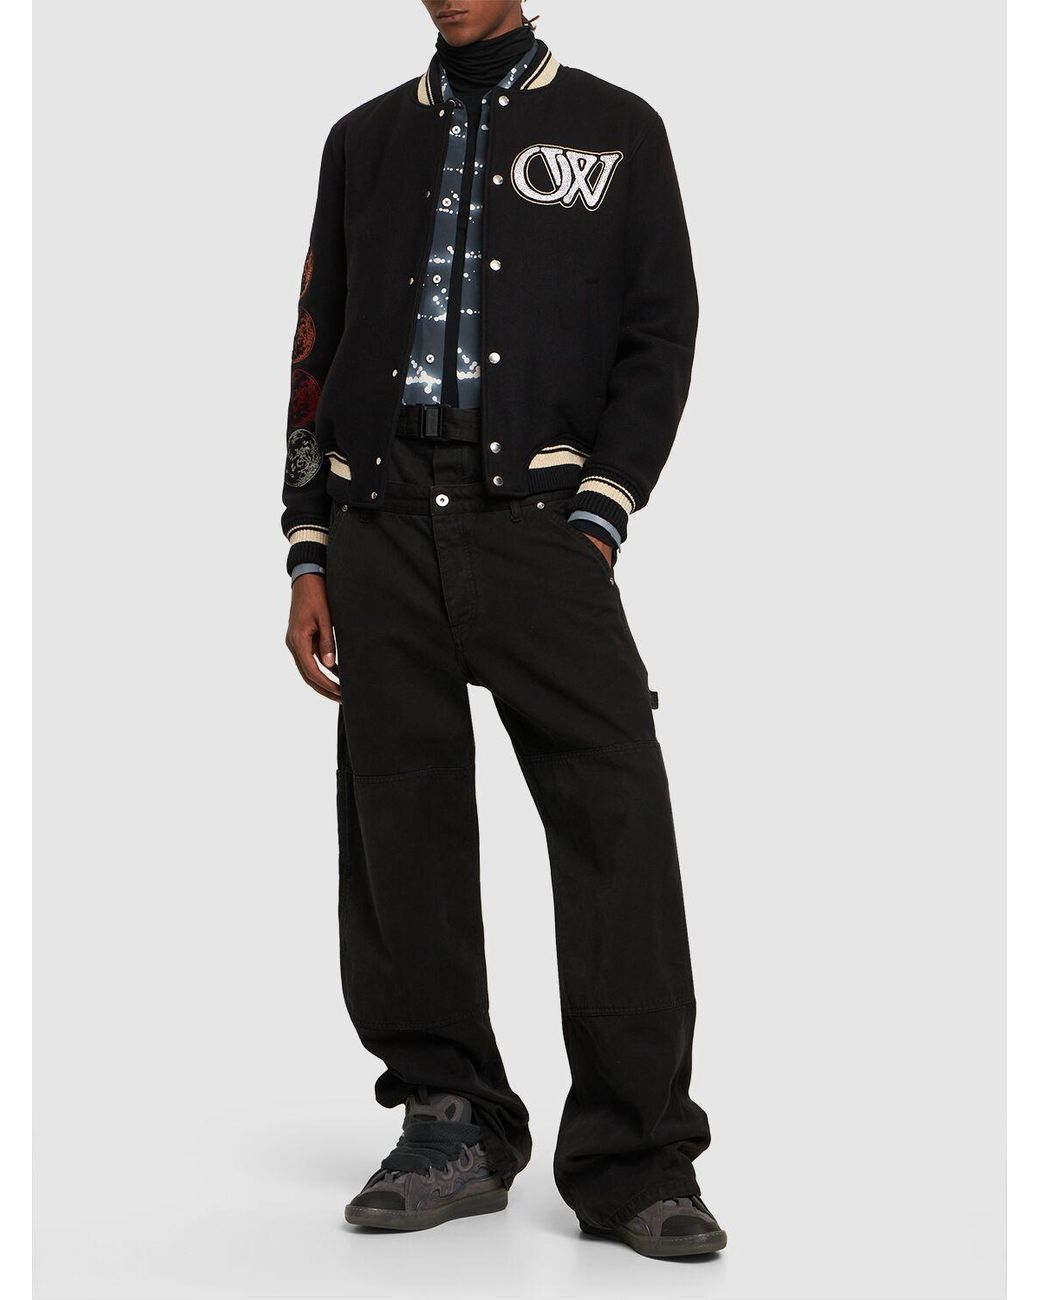 Off-White c/o Virgil Abloh Cryst Moon Phase Wool Varsity Jacket in Black  for Men